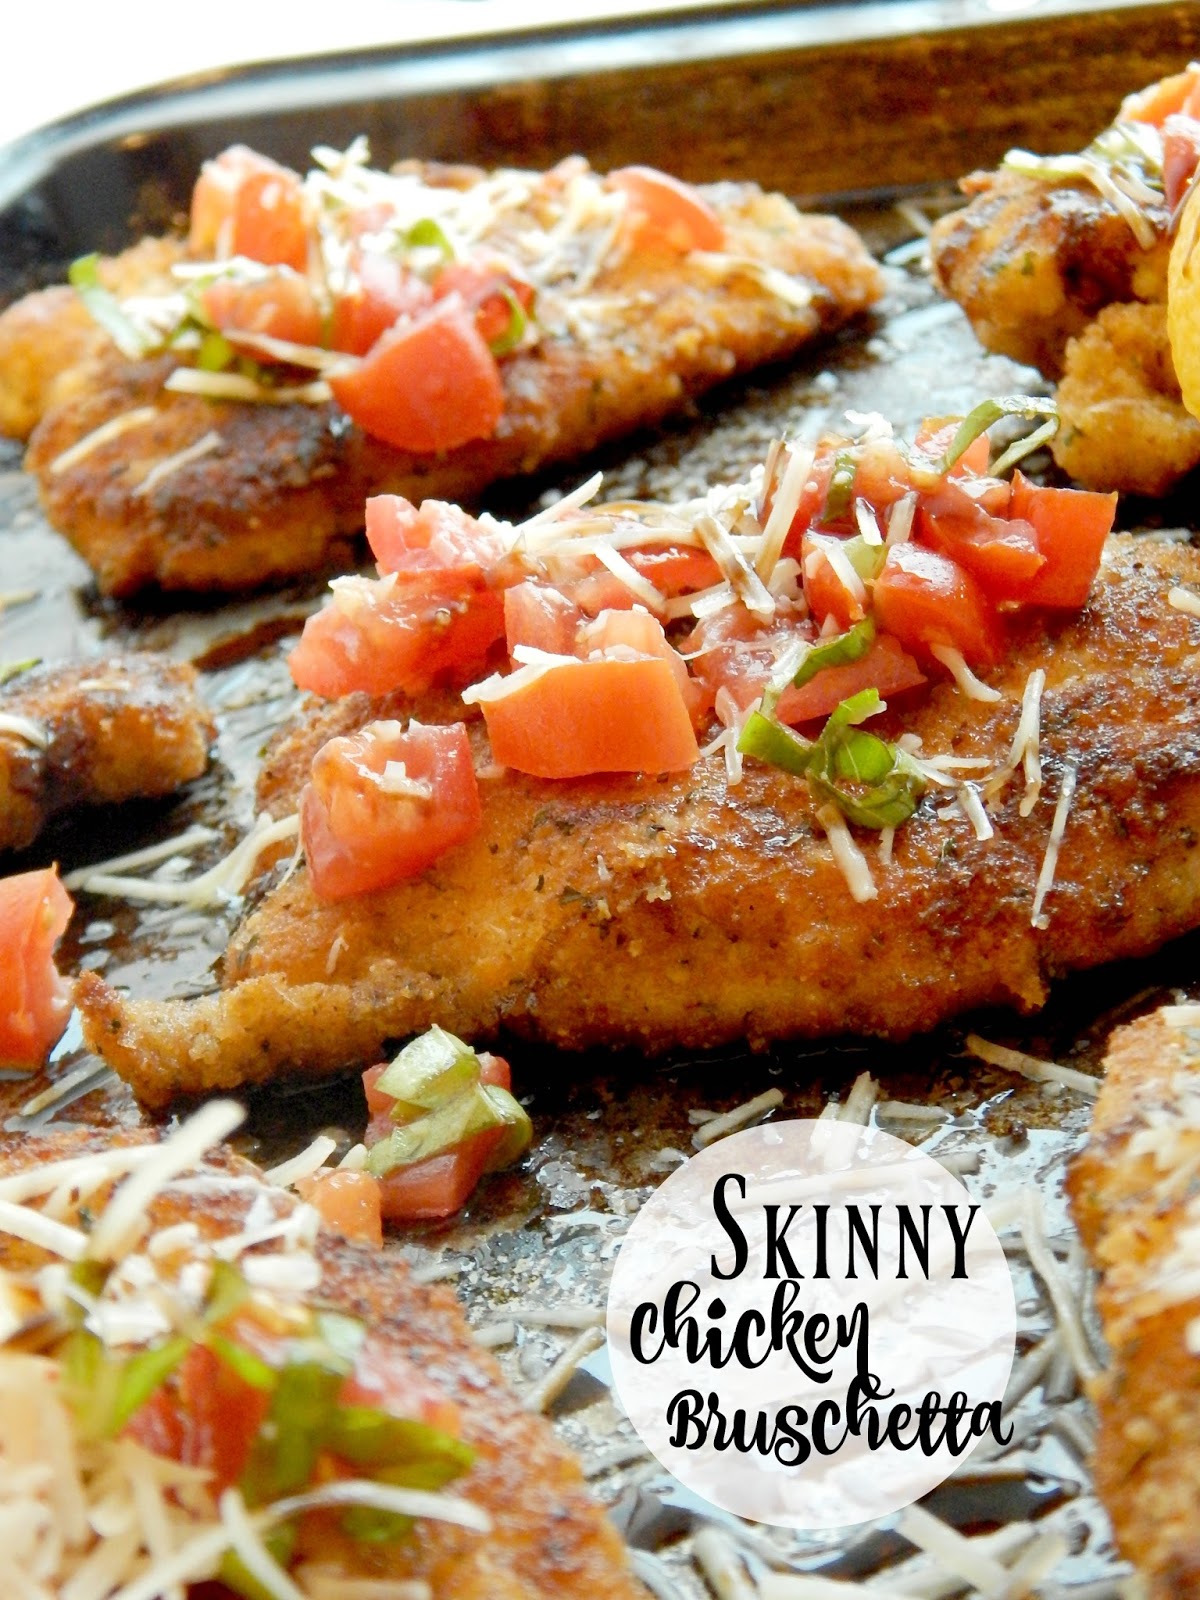 Skinny Chicken Bruschetta | Ally's Sweet & Savory Eats